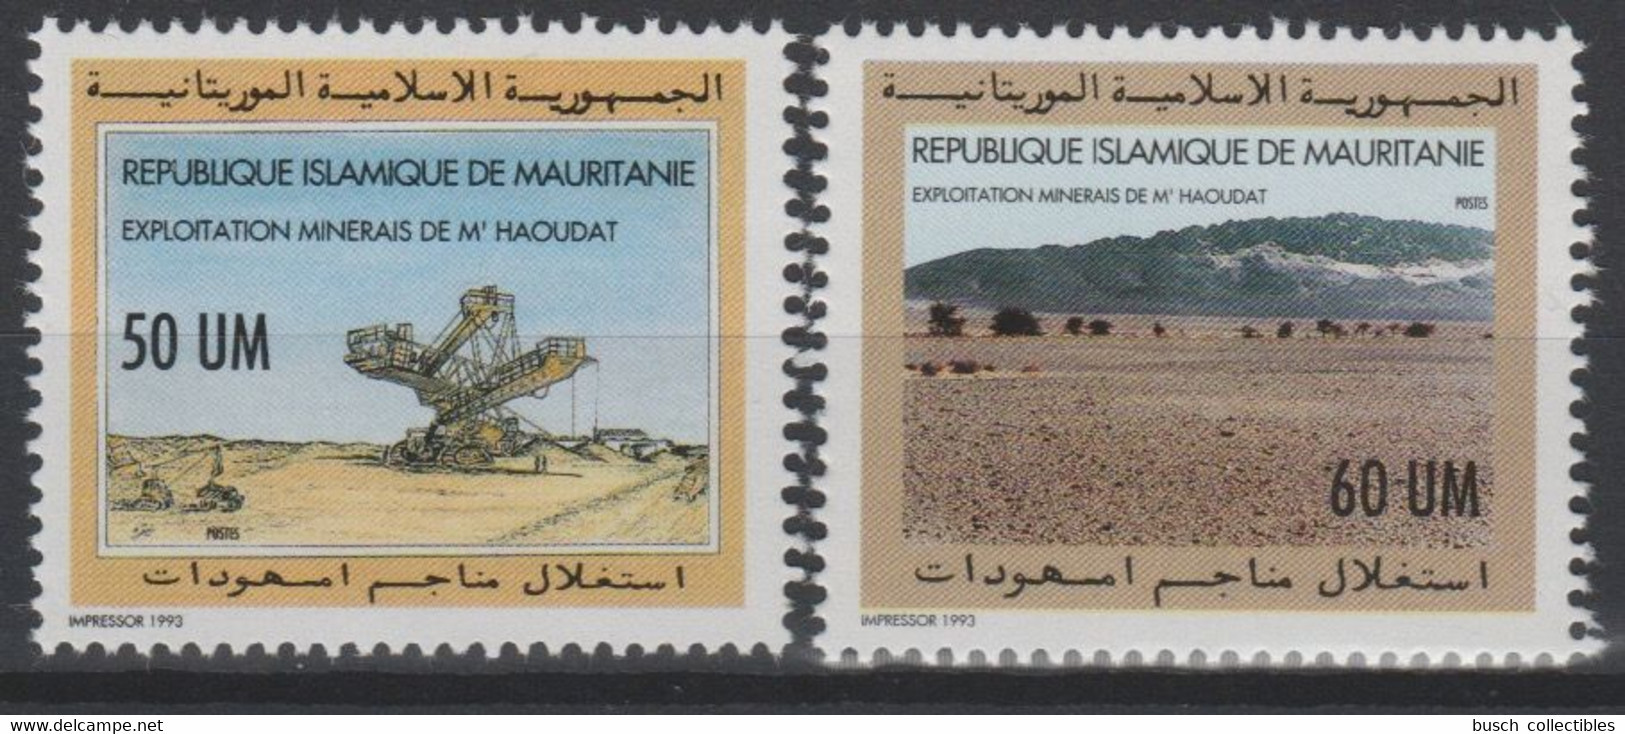 Mauritanie Mauretanien Mauritania 1993 Mi. 1010 - 1011 Exploitation Minerais M'Haoudat 2 Val. ** - Mauretanien (1960-...)